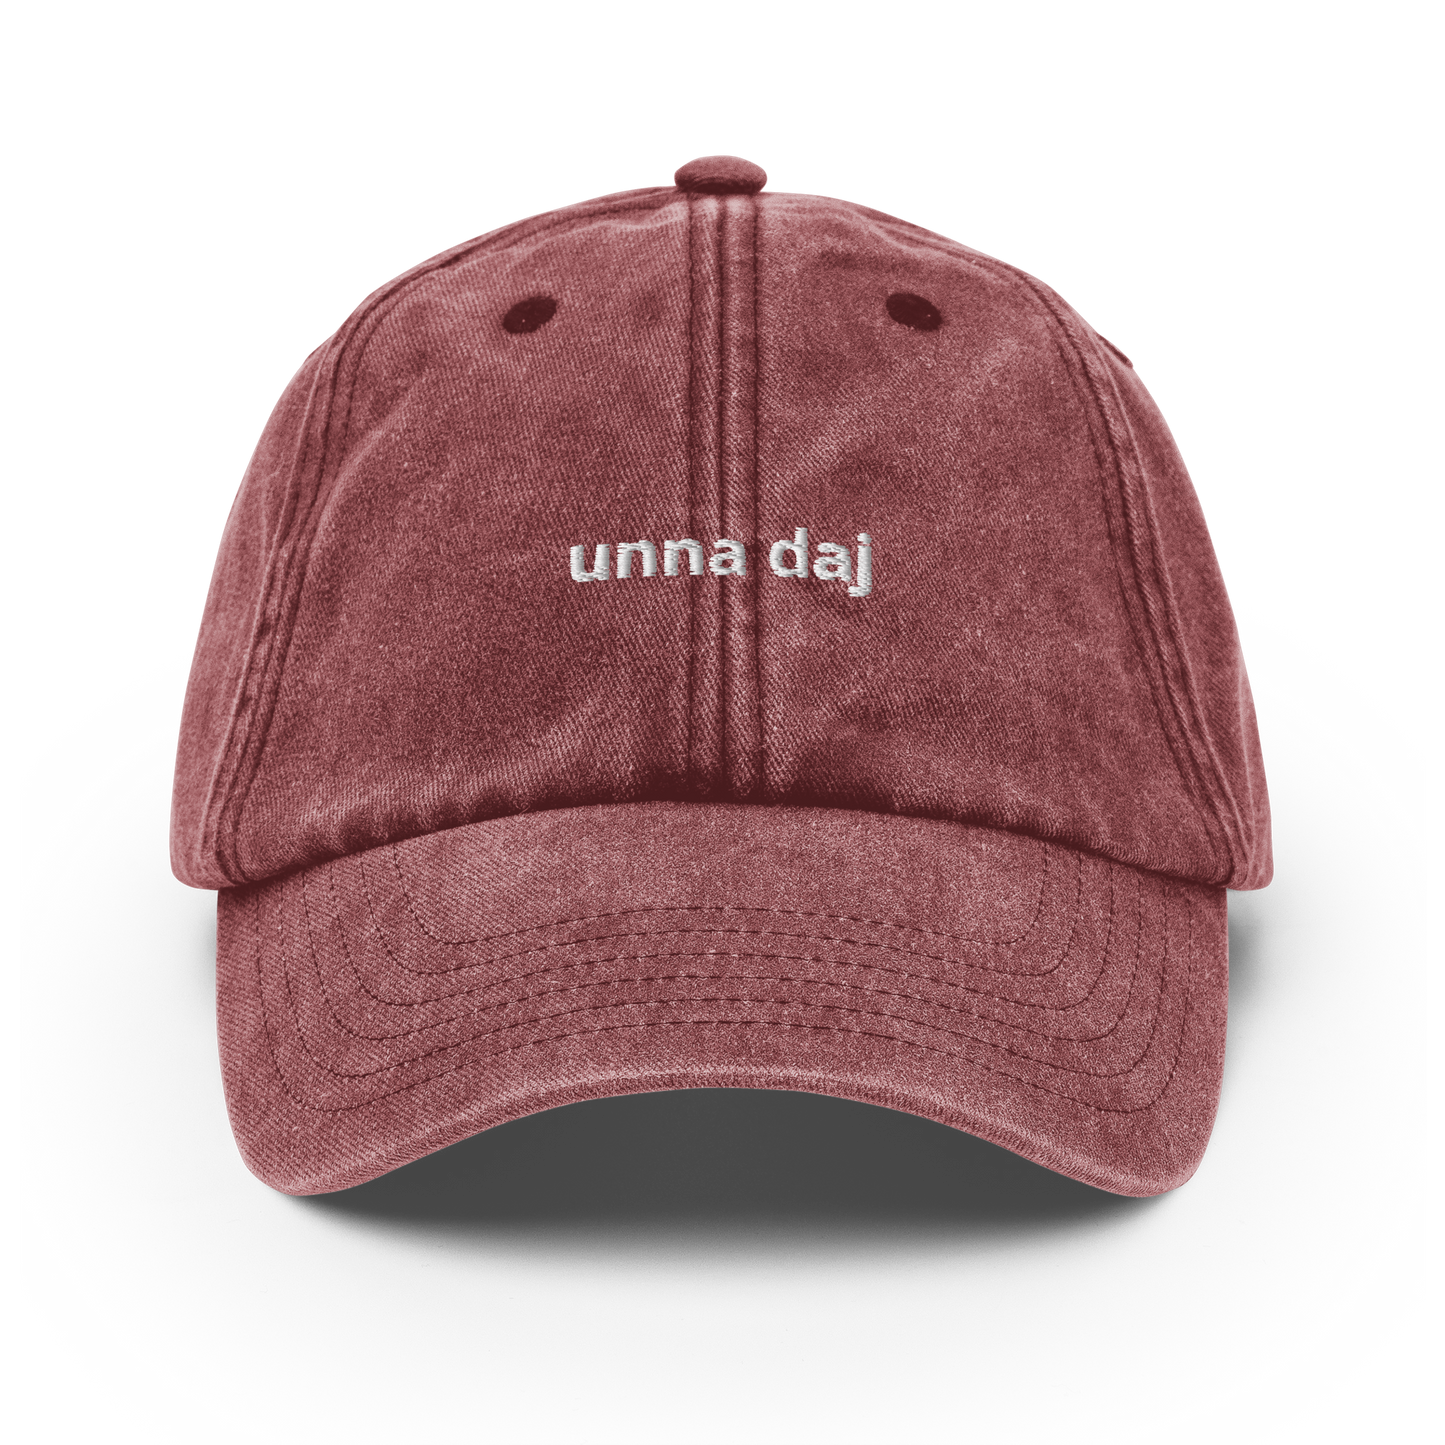 unna daj - vintage hat